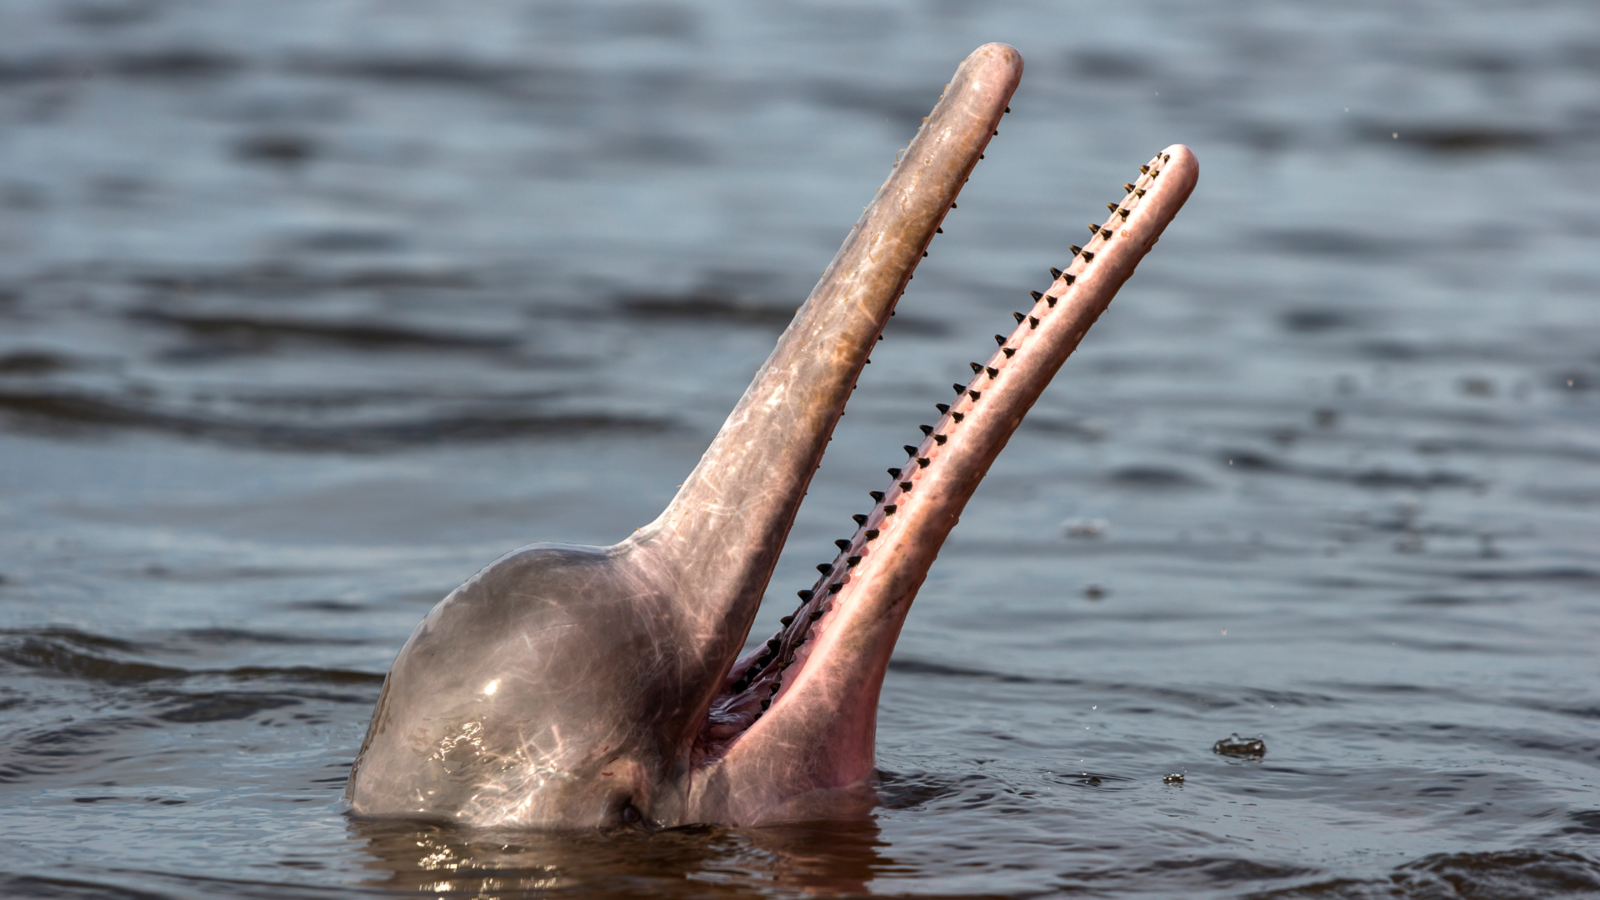 Amazon river dolphin in the Rio Negro. Image Credit: Michel VIARD from Getty Images via Canva Pro.